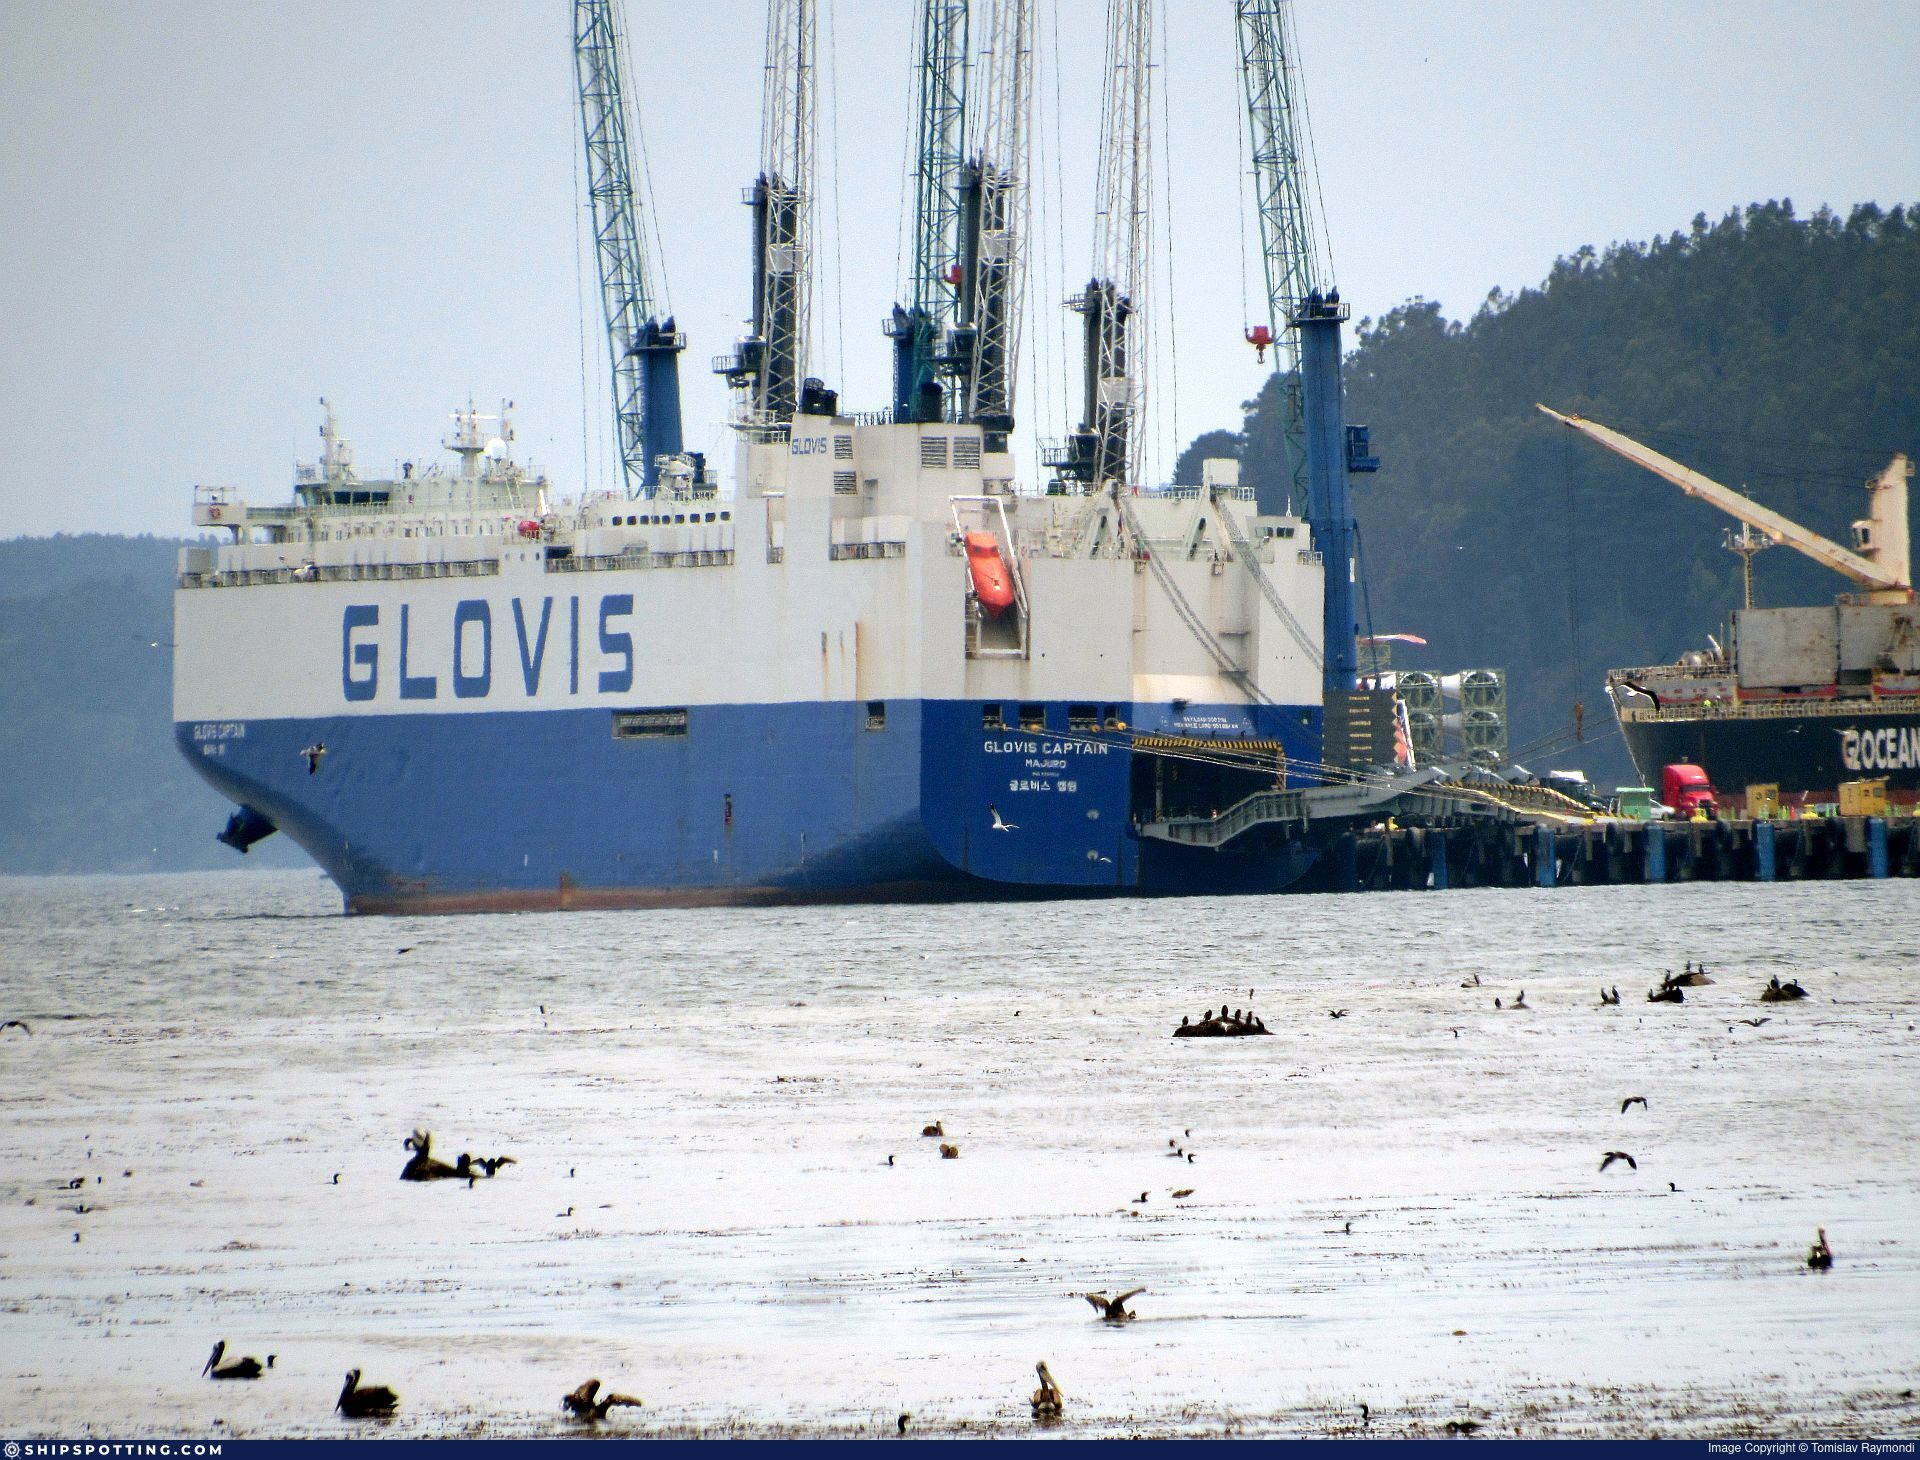 GLOVIS CAPTAIN - IMO 9707015 - ShipSpotting.com - Ship Photos, Information,  Videos and Ship Tracker